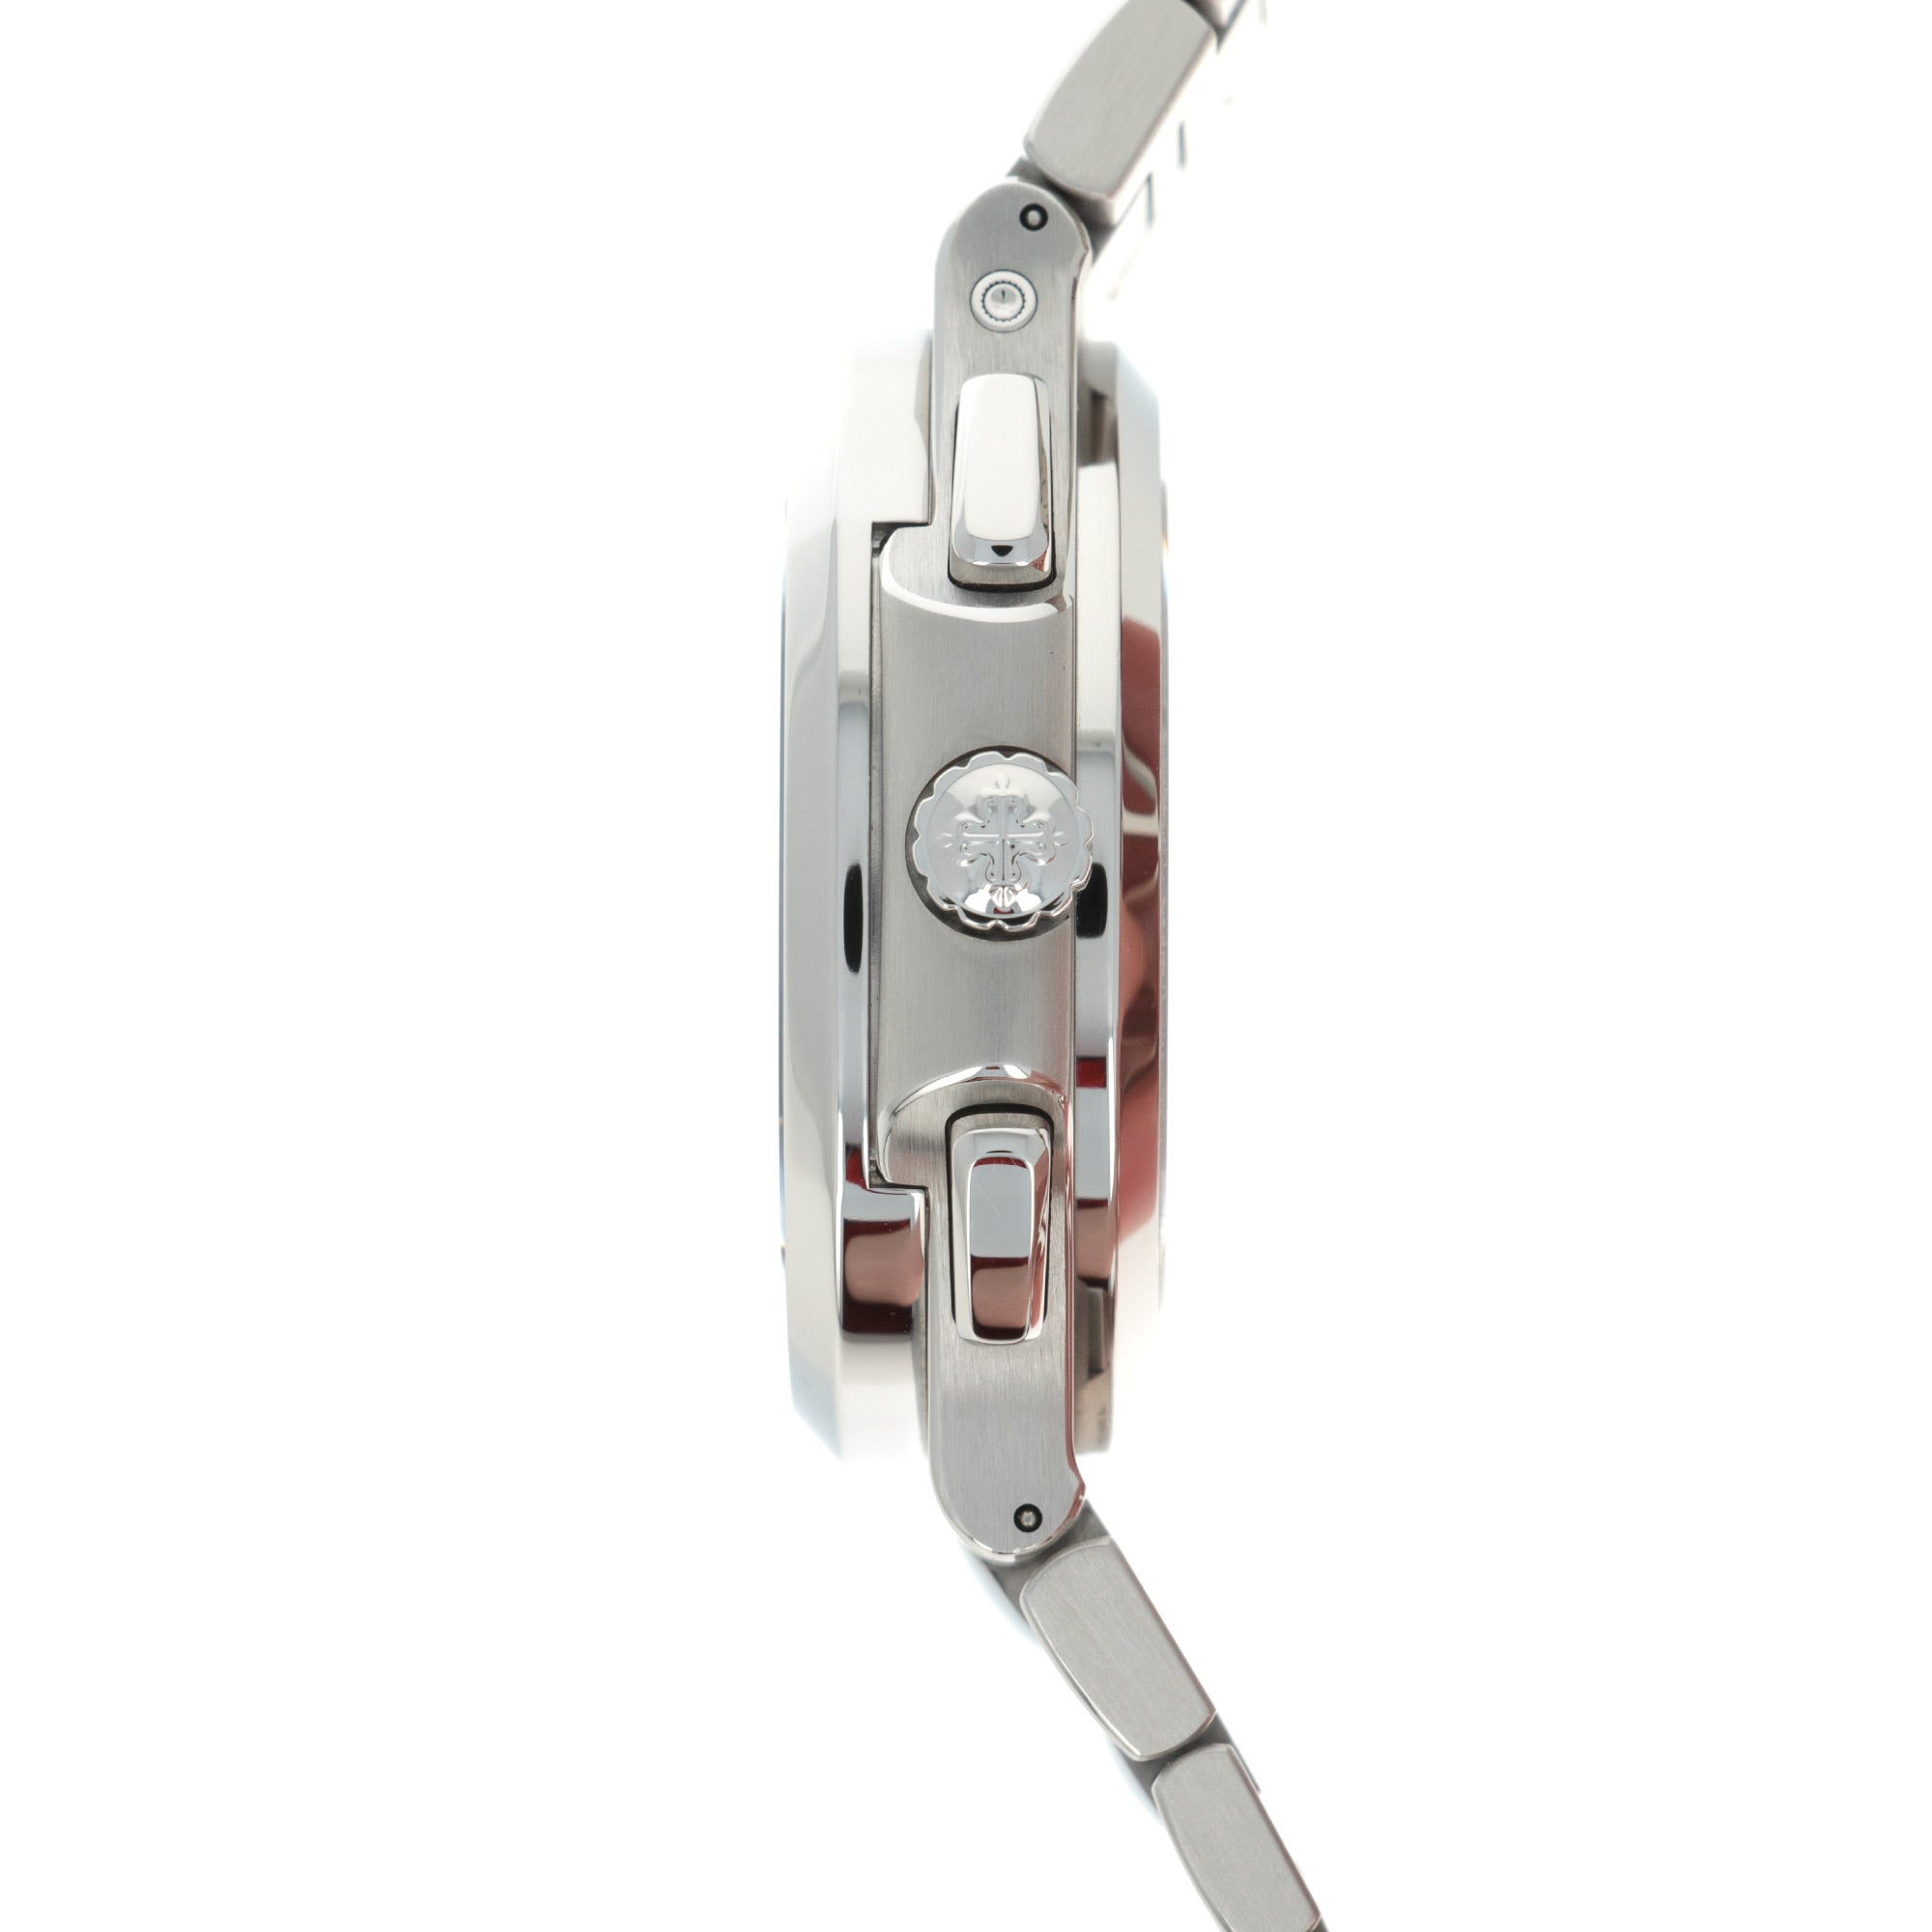 Patek Philippe - Patek Philippe Steel Nautilus Chronograph Watch Ref. 5990 - The Keystone Watches